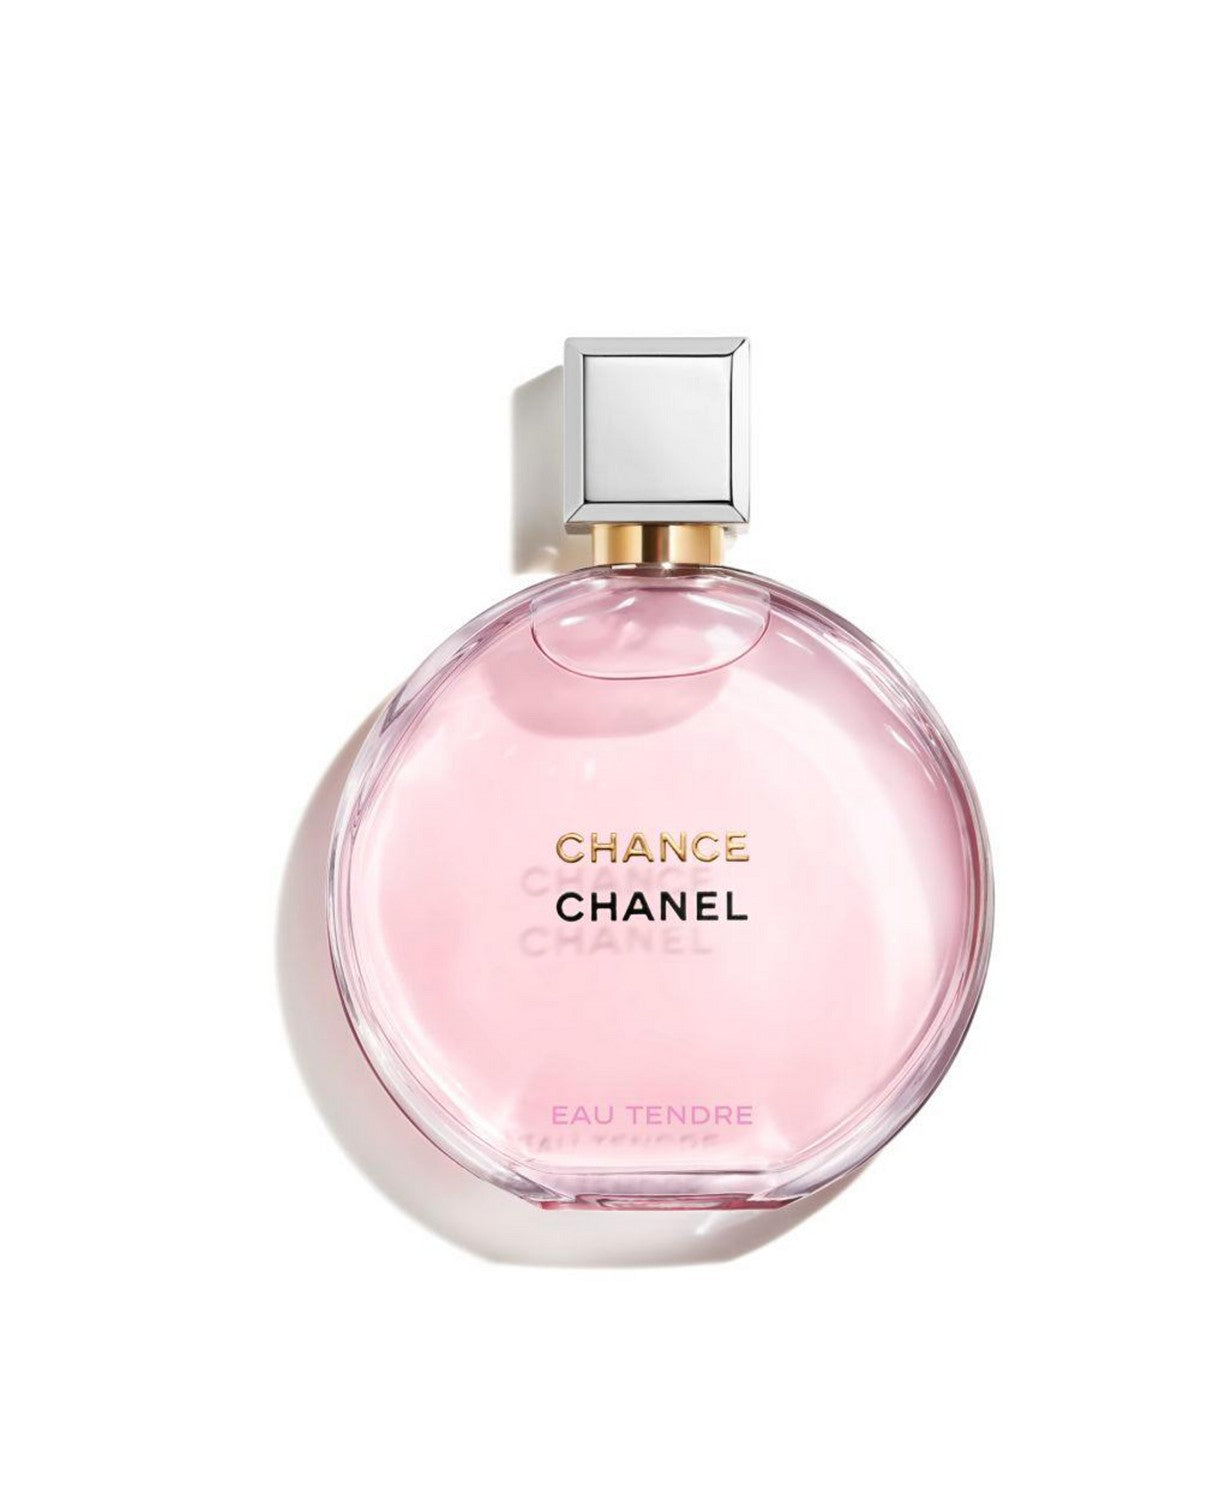 Chanel Chance eau tendre eau de toilette perfume decant in 3ml 5ml 10 ml